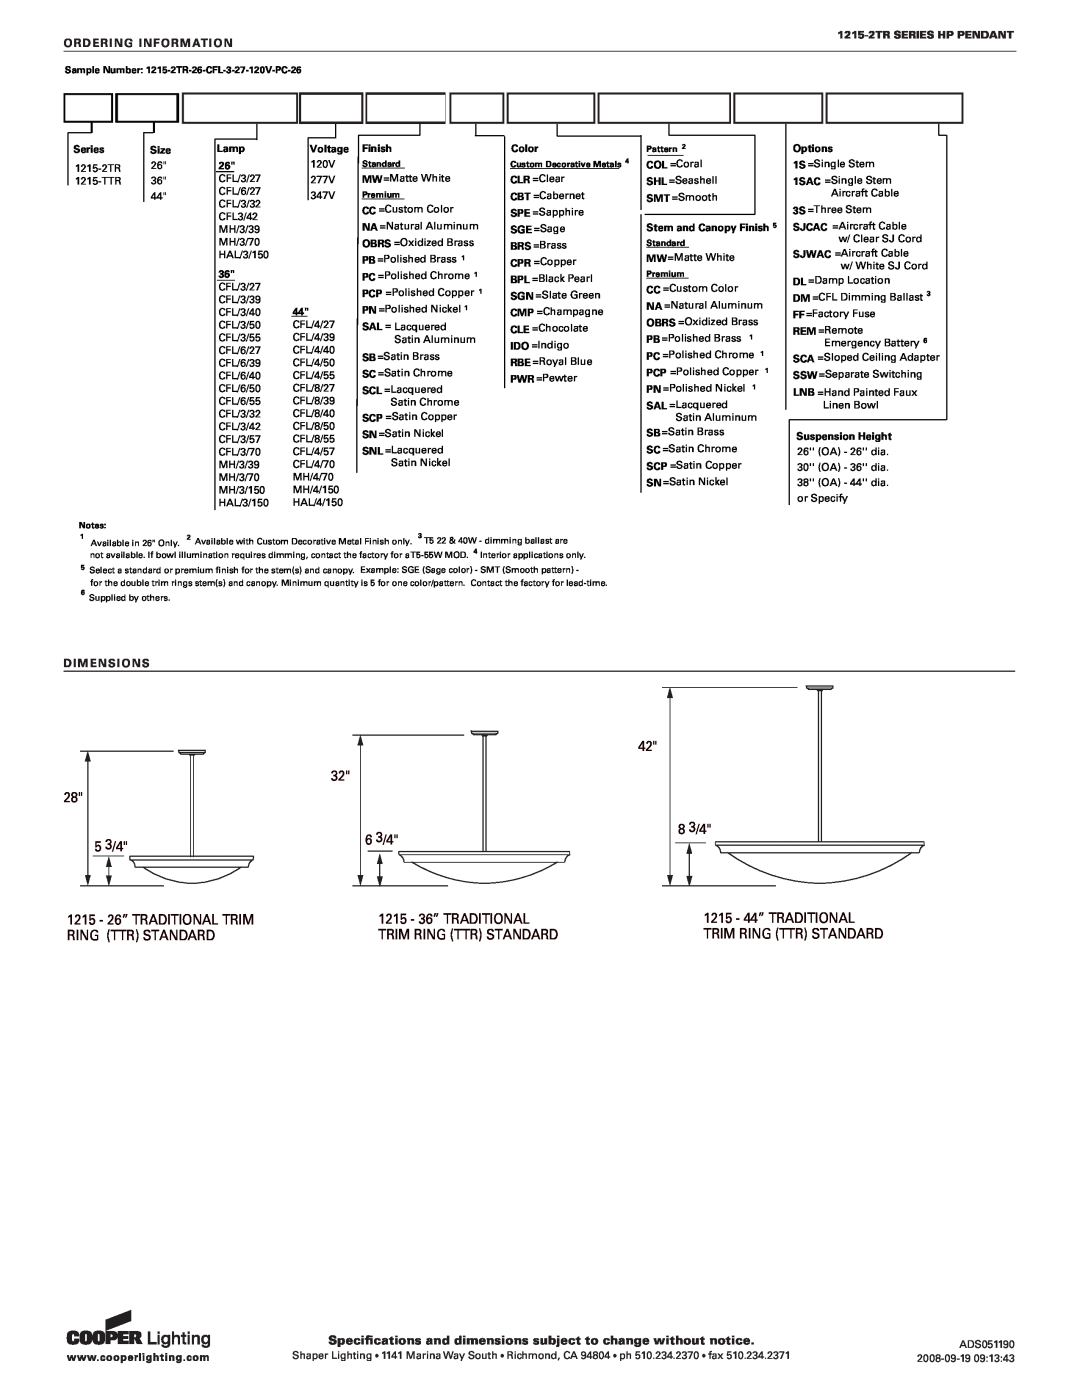 Cooper Lighting 1215-2TR SERIES 32 28 5 3/4, 1215 - 26” TRADITIONAL TRIM RING TTR STANDARD, 42 6 3/4, 8 3/4, Series, Size 